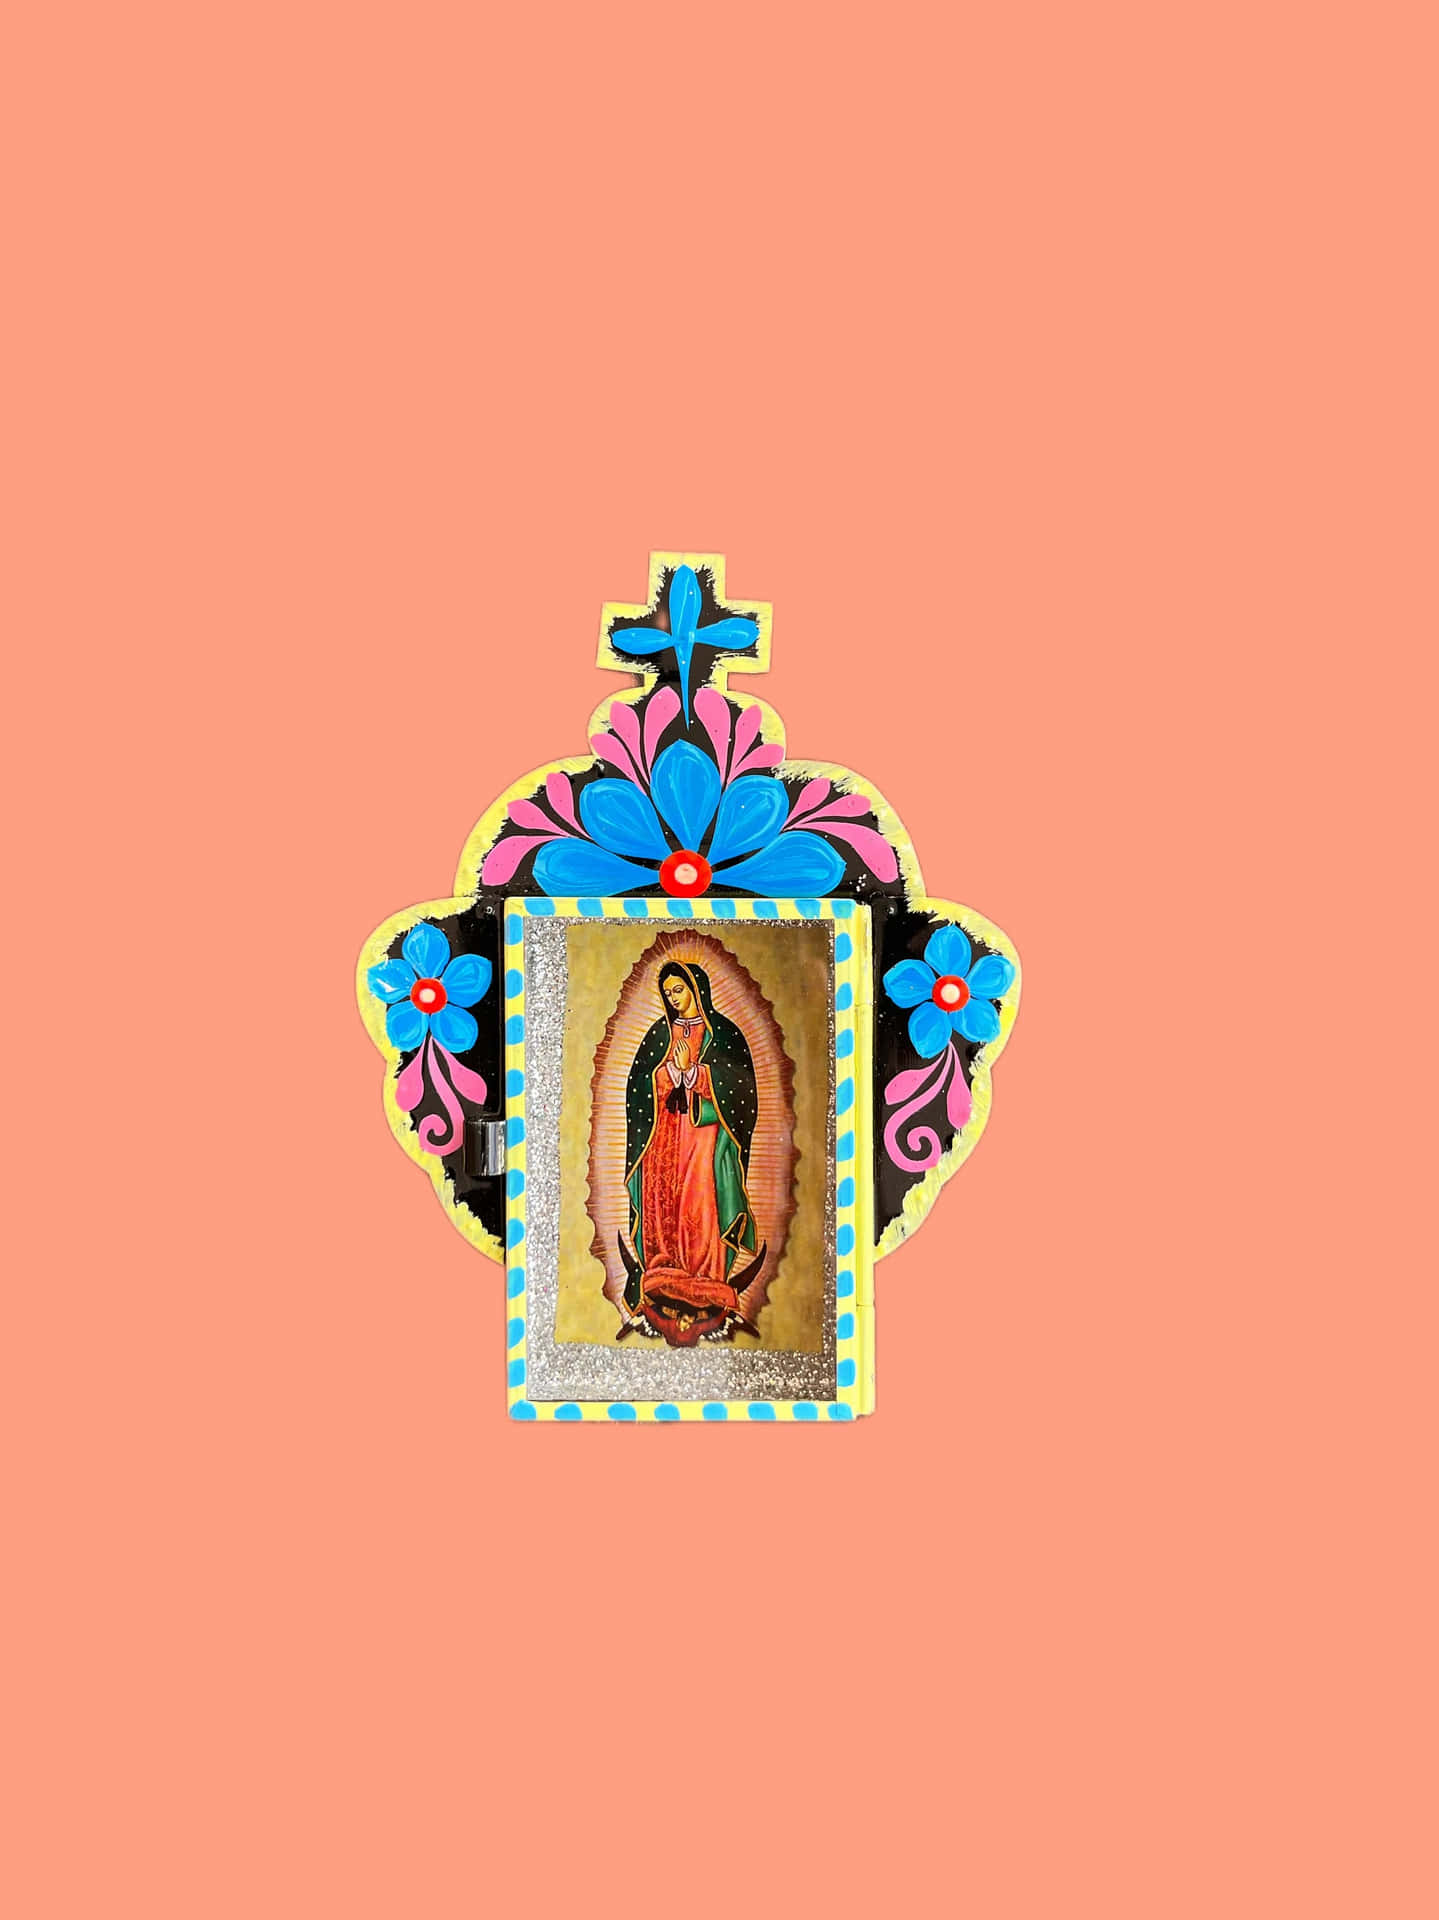 Virgende Guadalupei Phone Case Design Wallpaper